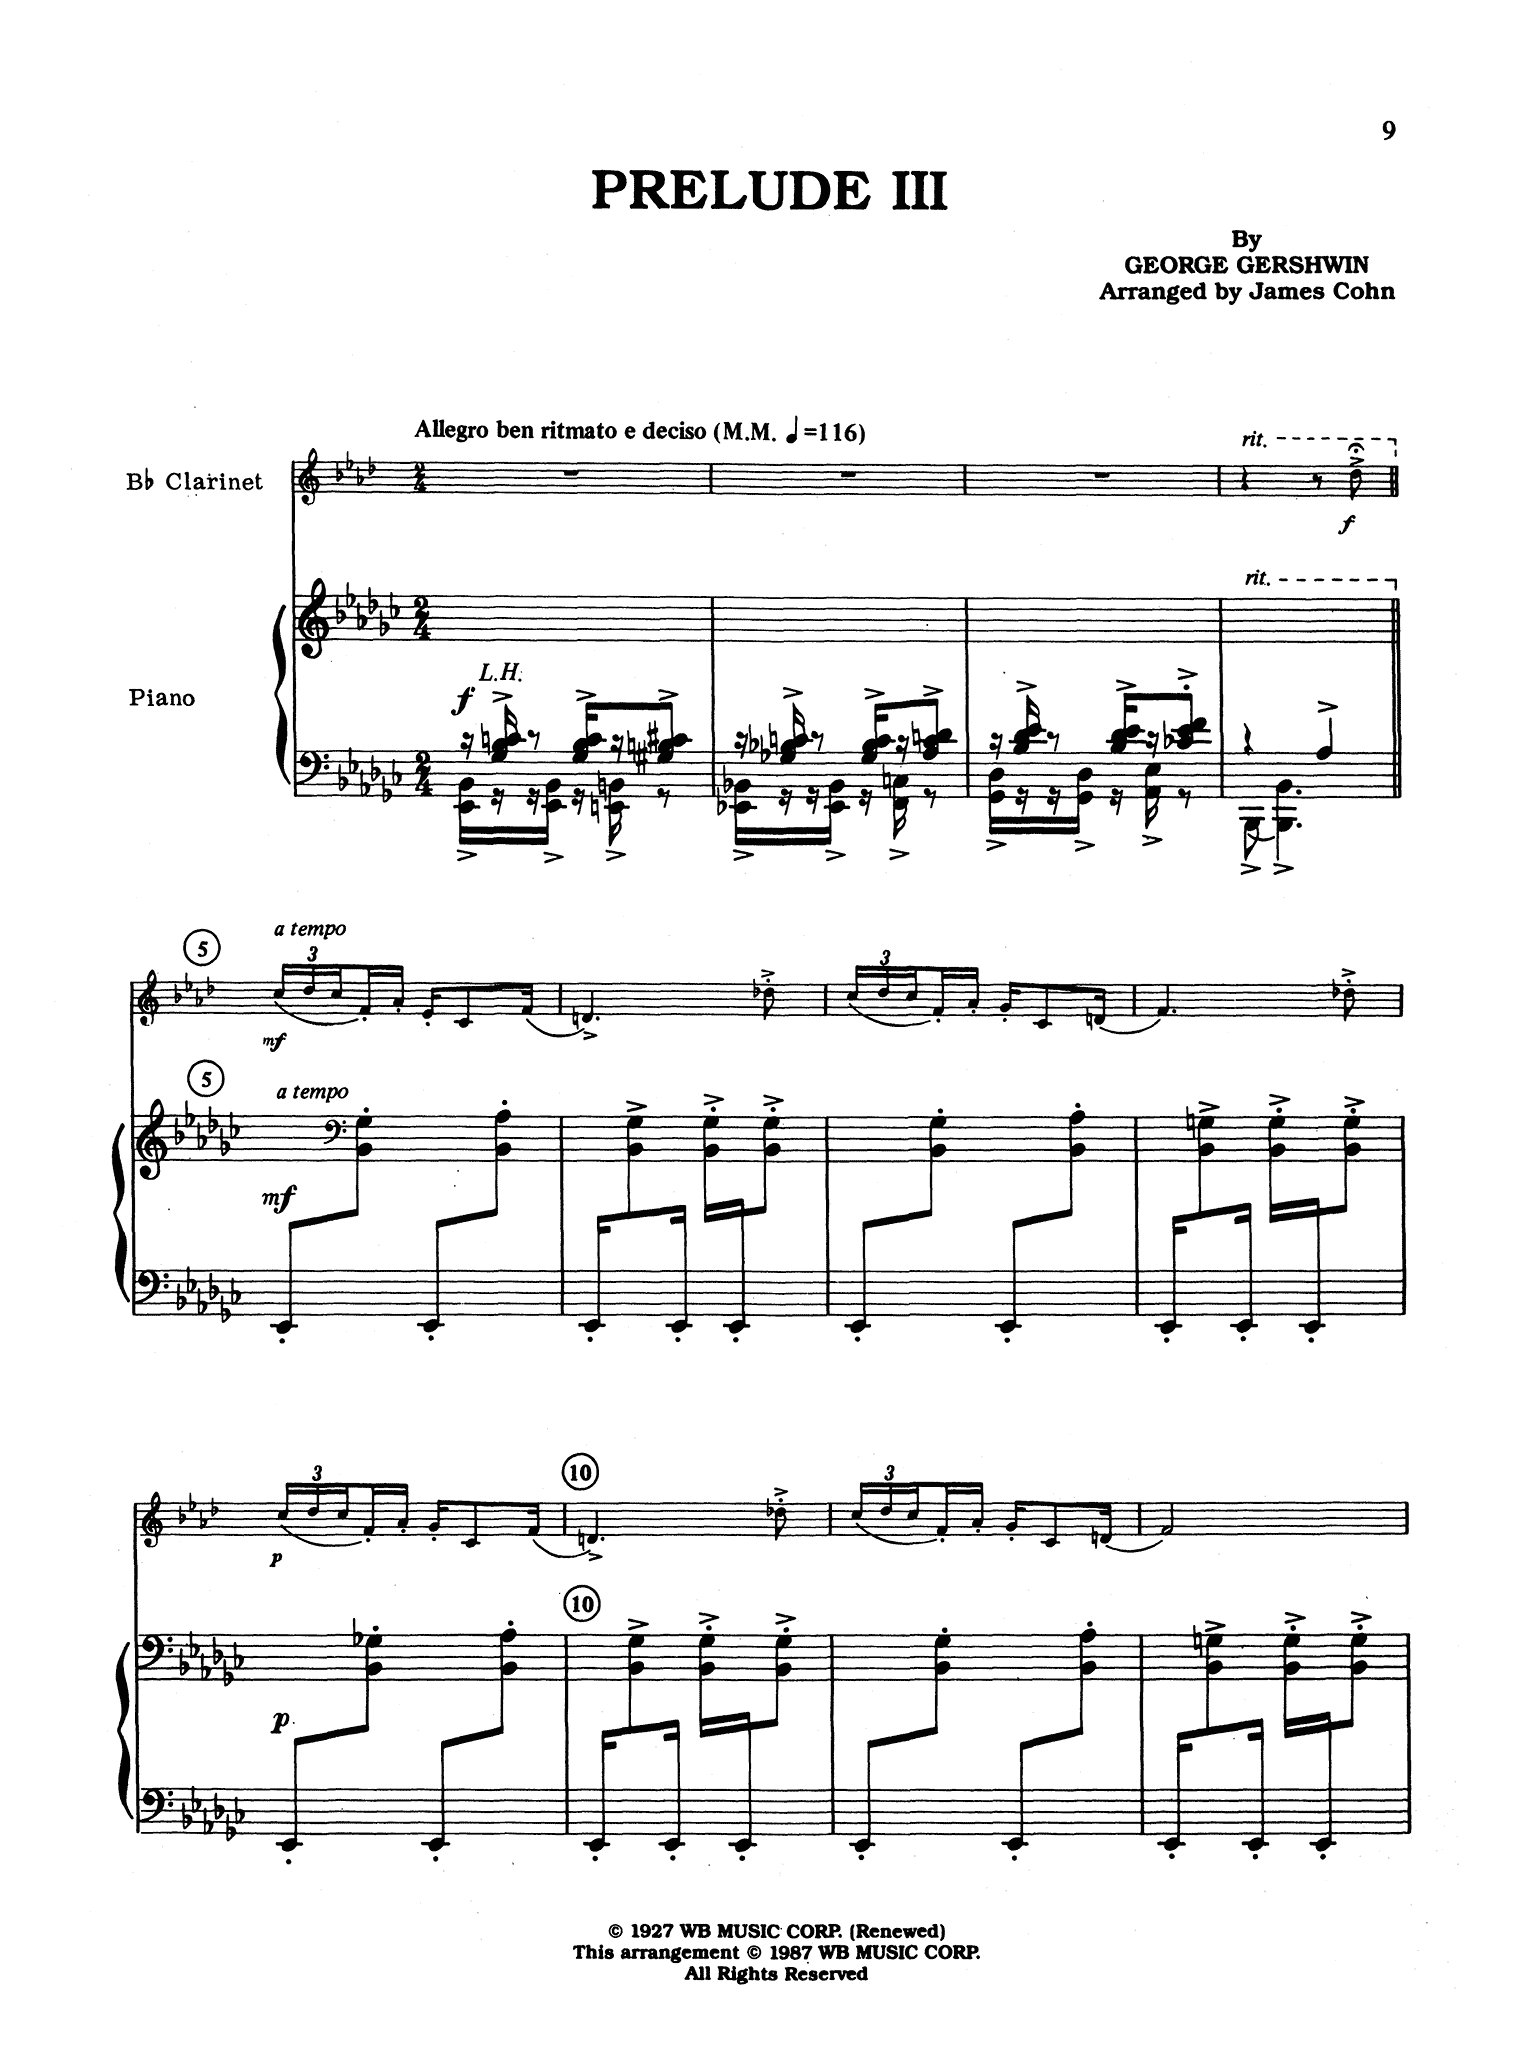 Gershwin 3 Preludes, arranged by Cohn - Movement 3